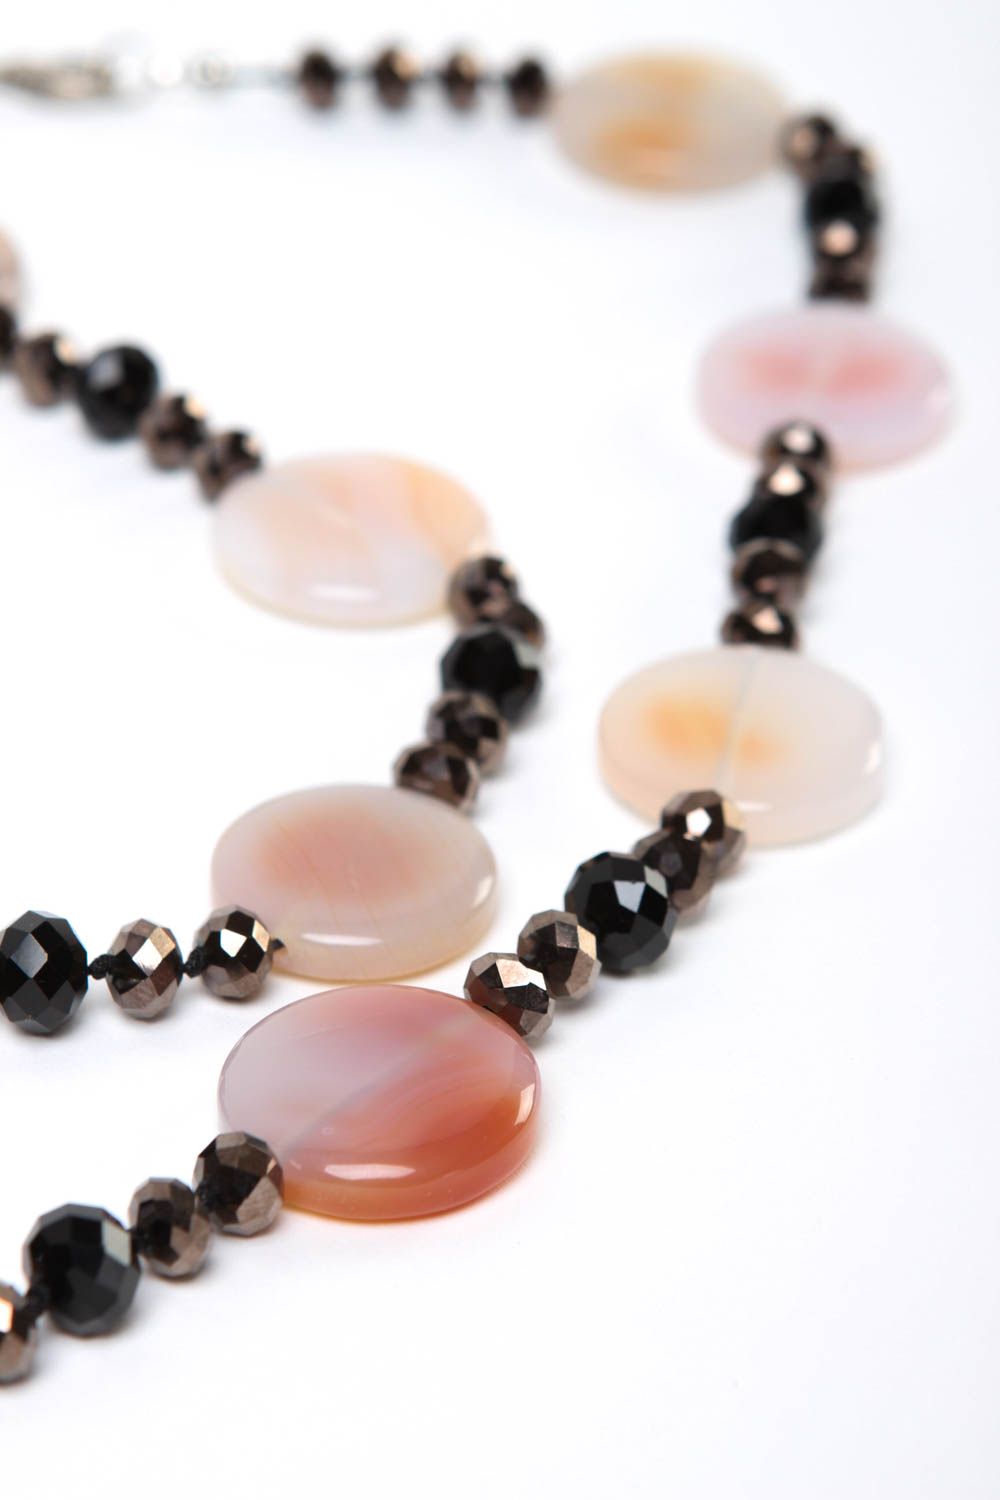 Handmade necklace bead necklace gemstone jewelry designer accessories gift ideas photo 3